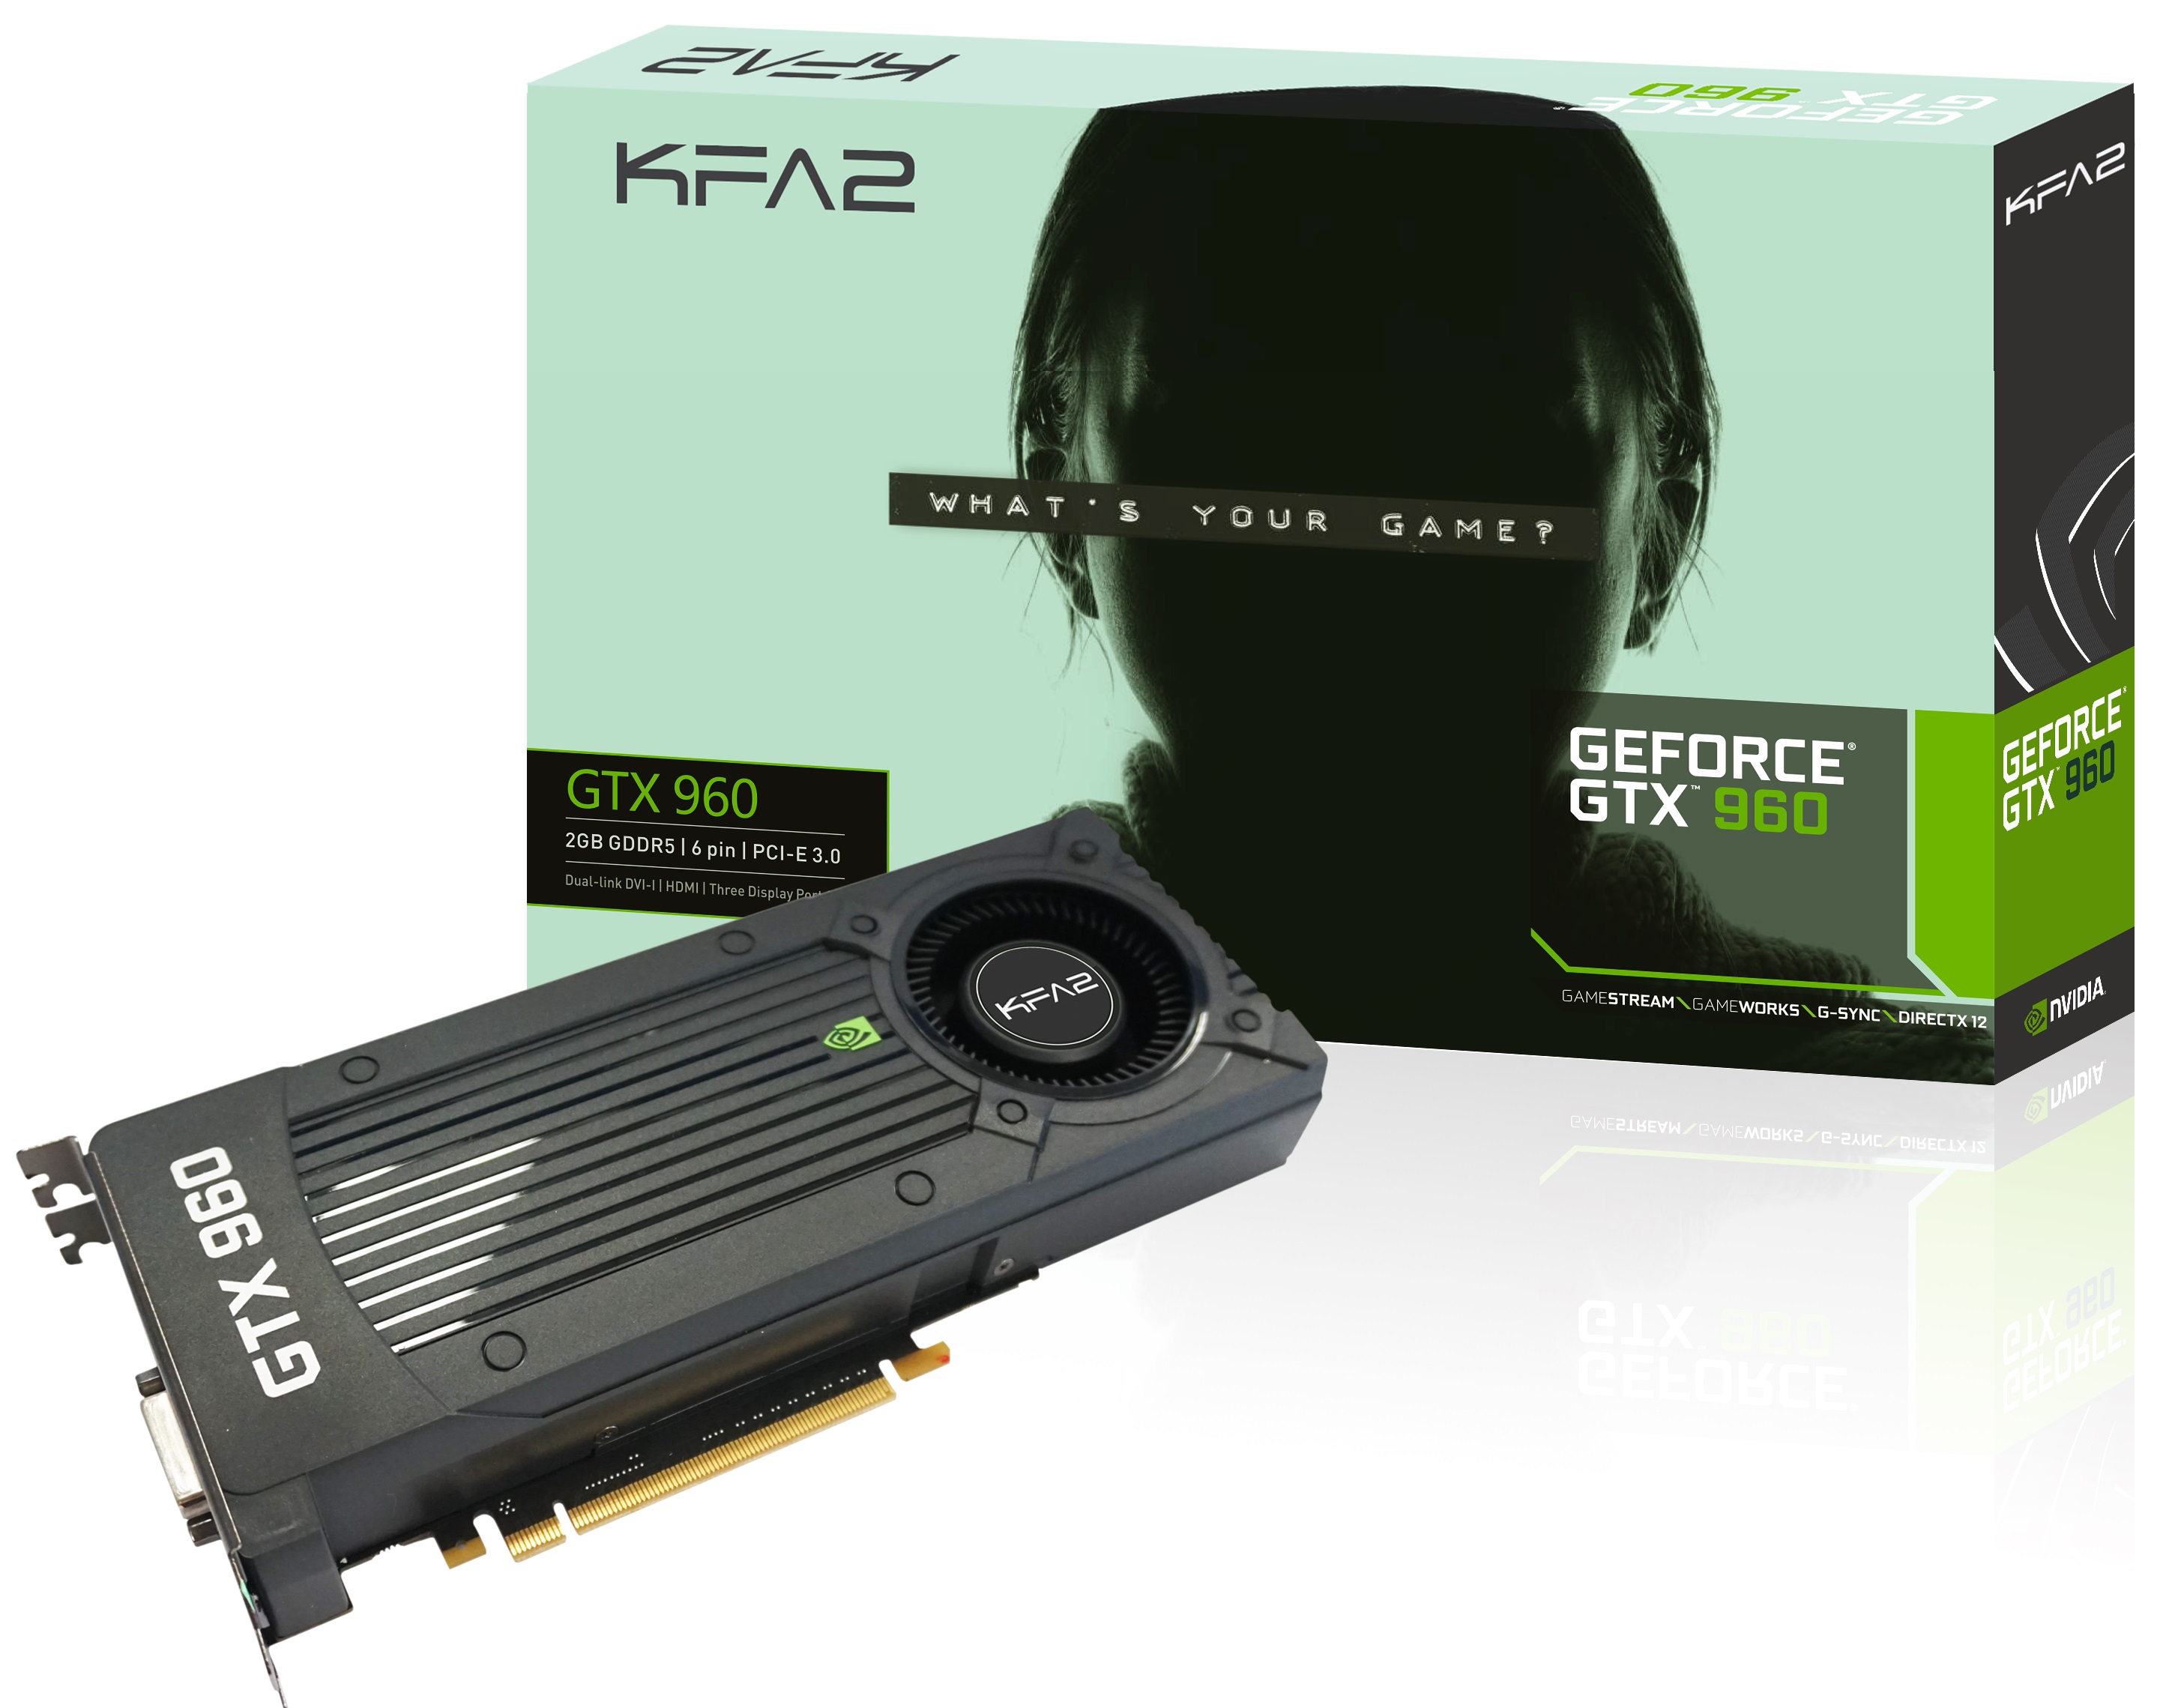 Galax And Kfa2 Introduce Geforce Gtx 960 Series Videocardz Com